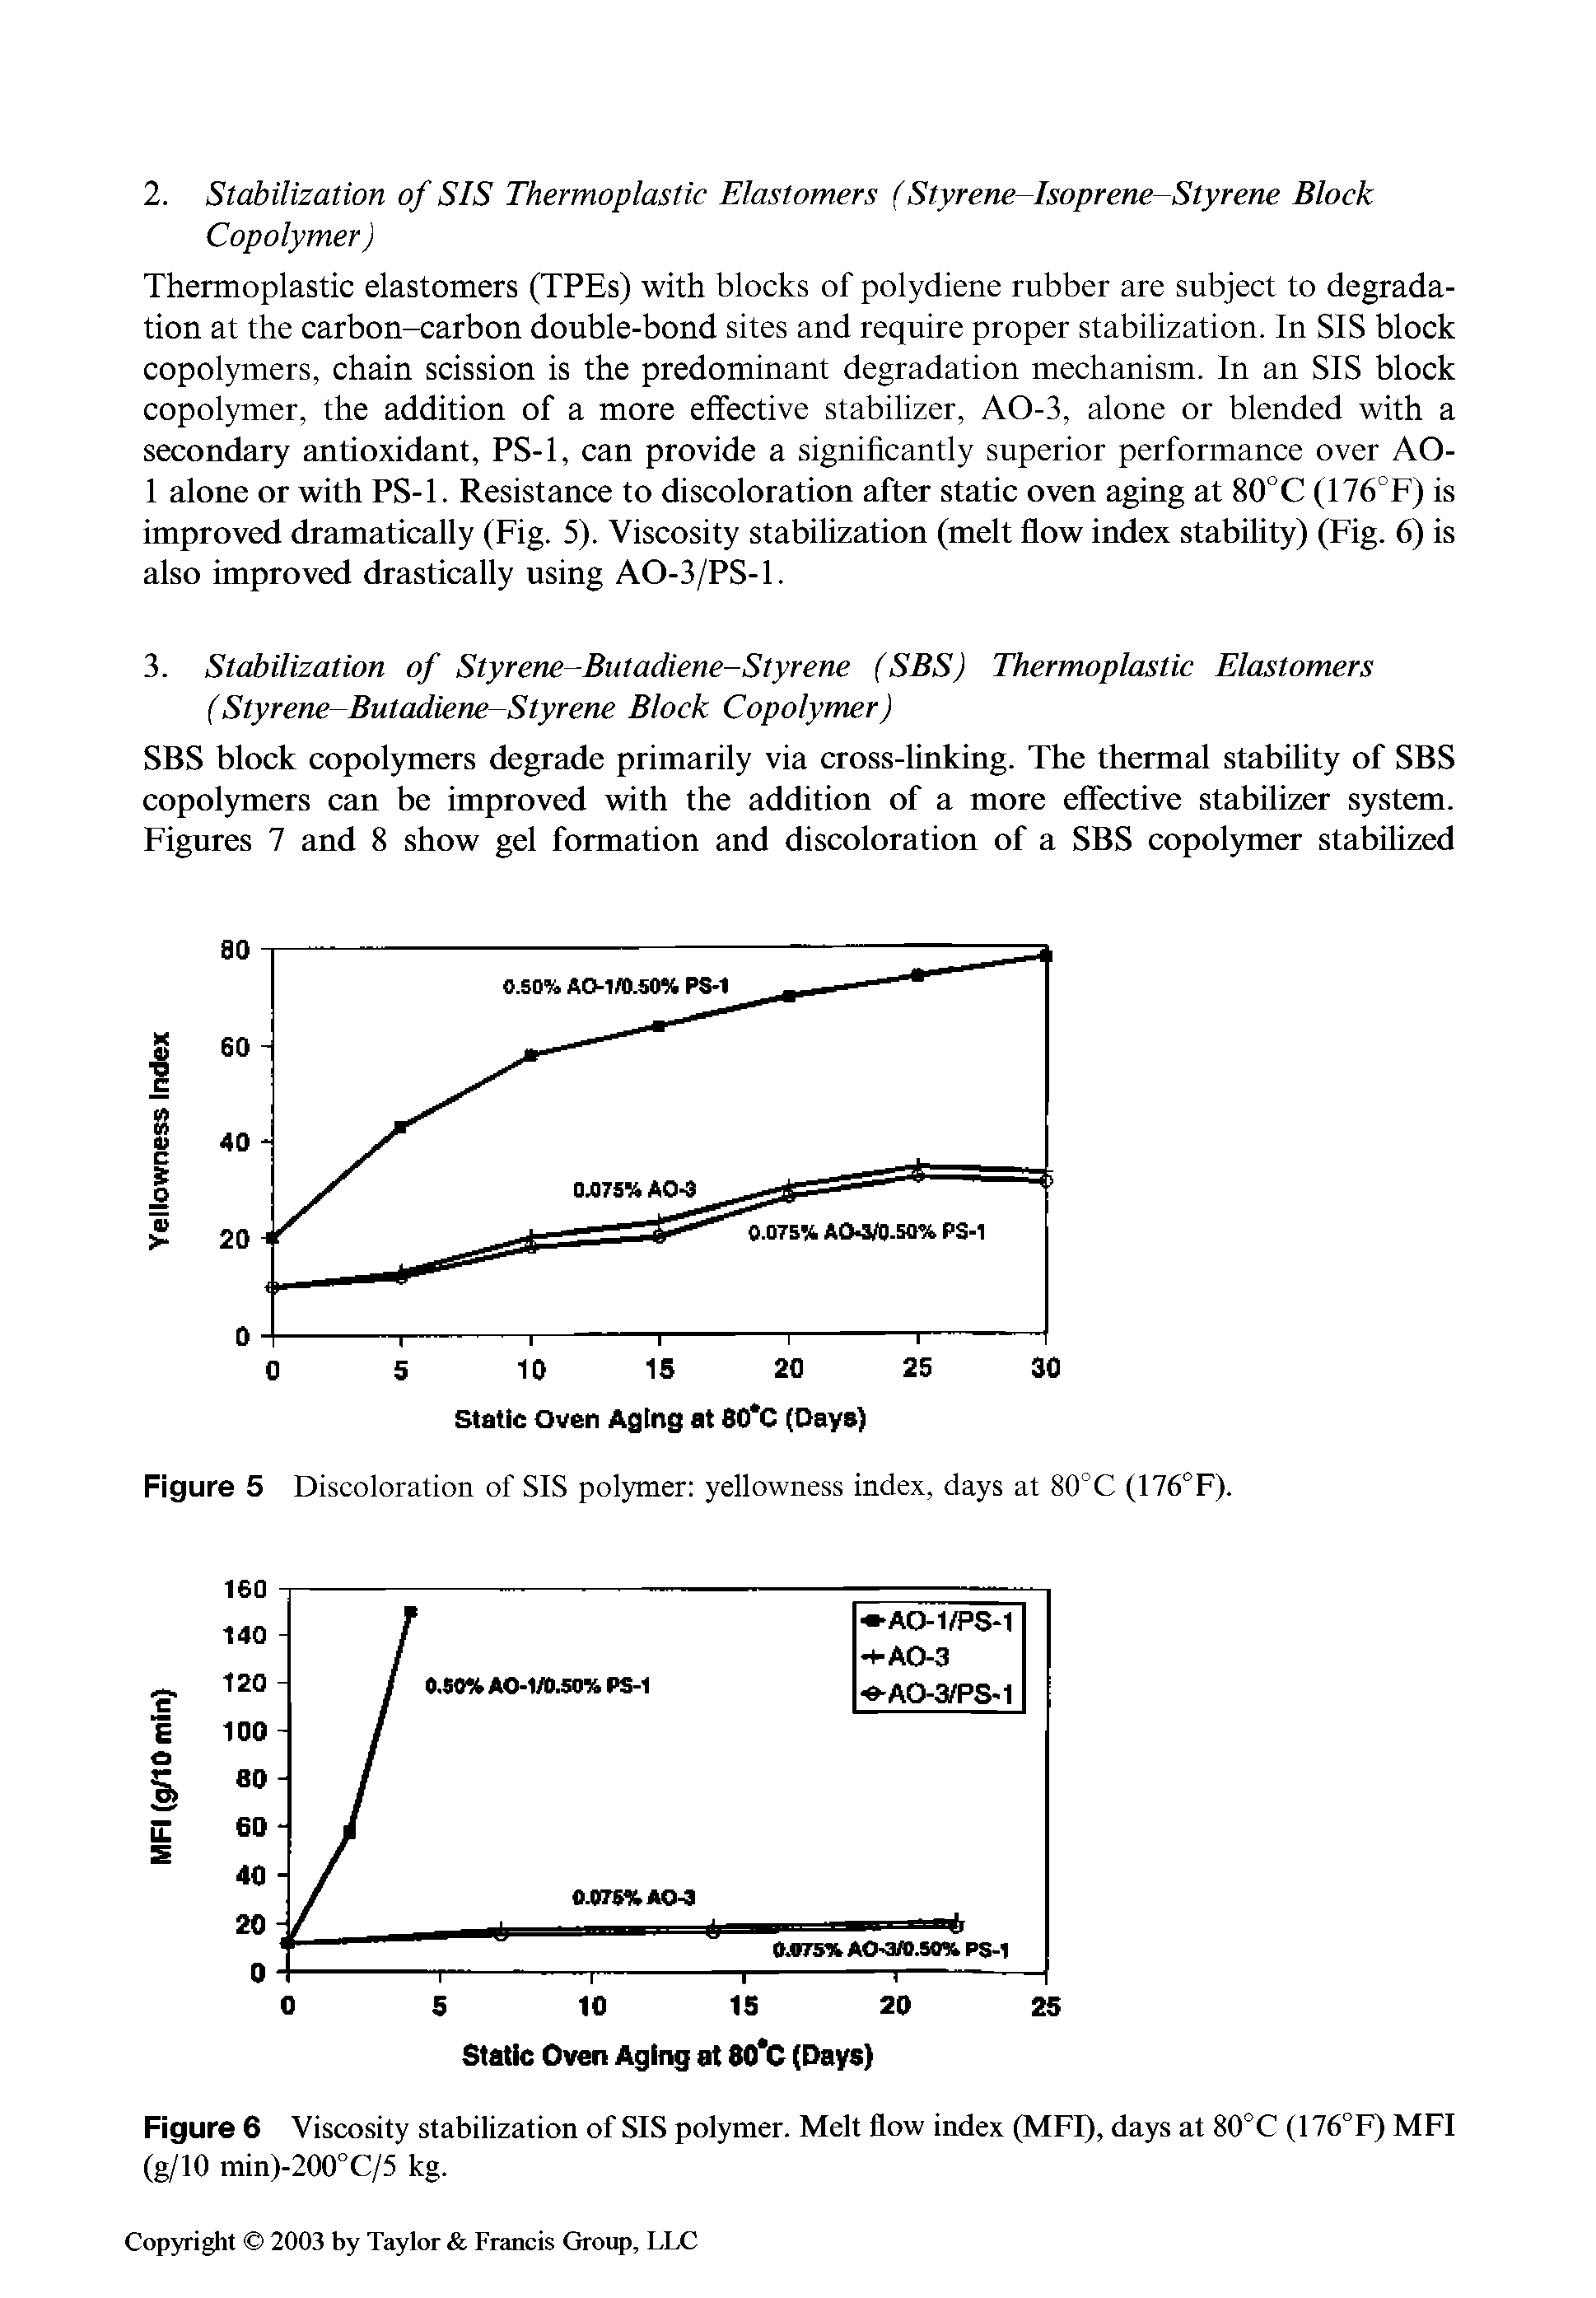 Figure 6 Viscosity stabilization of SIS polymer. Melt flow index (MFI), days at 80°C (176°F) MFI (g/10 min)-200°C/5 kg.